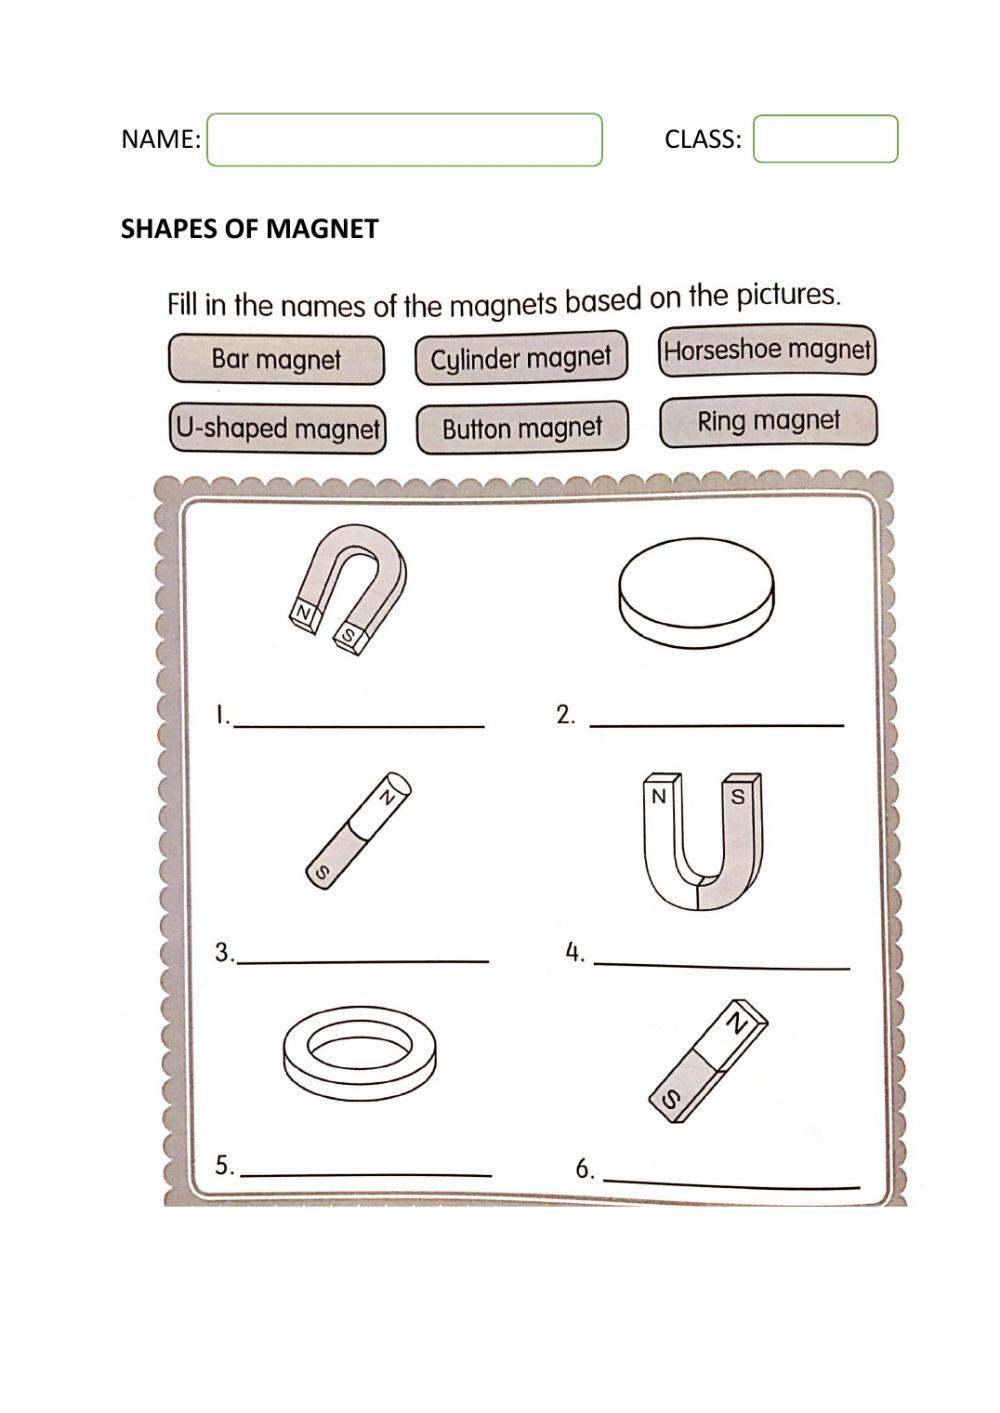 Shapes of magnet